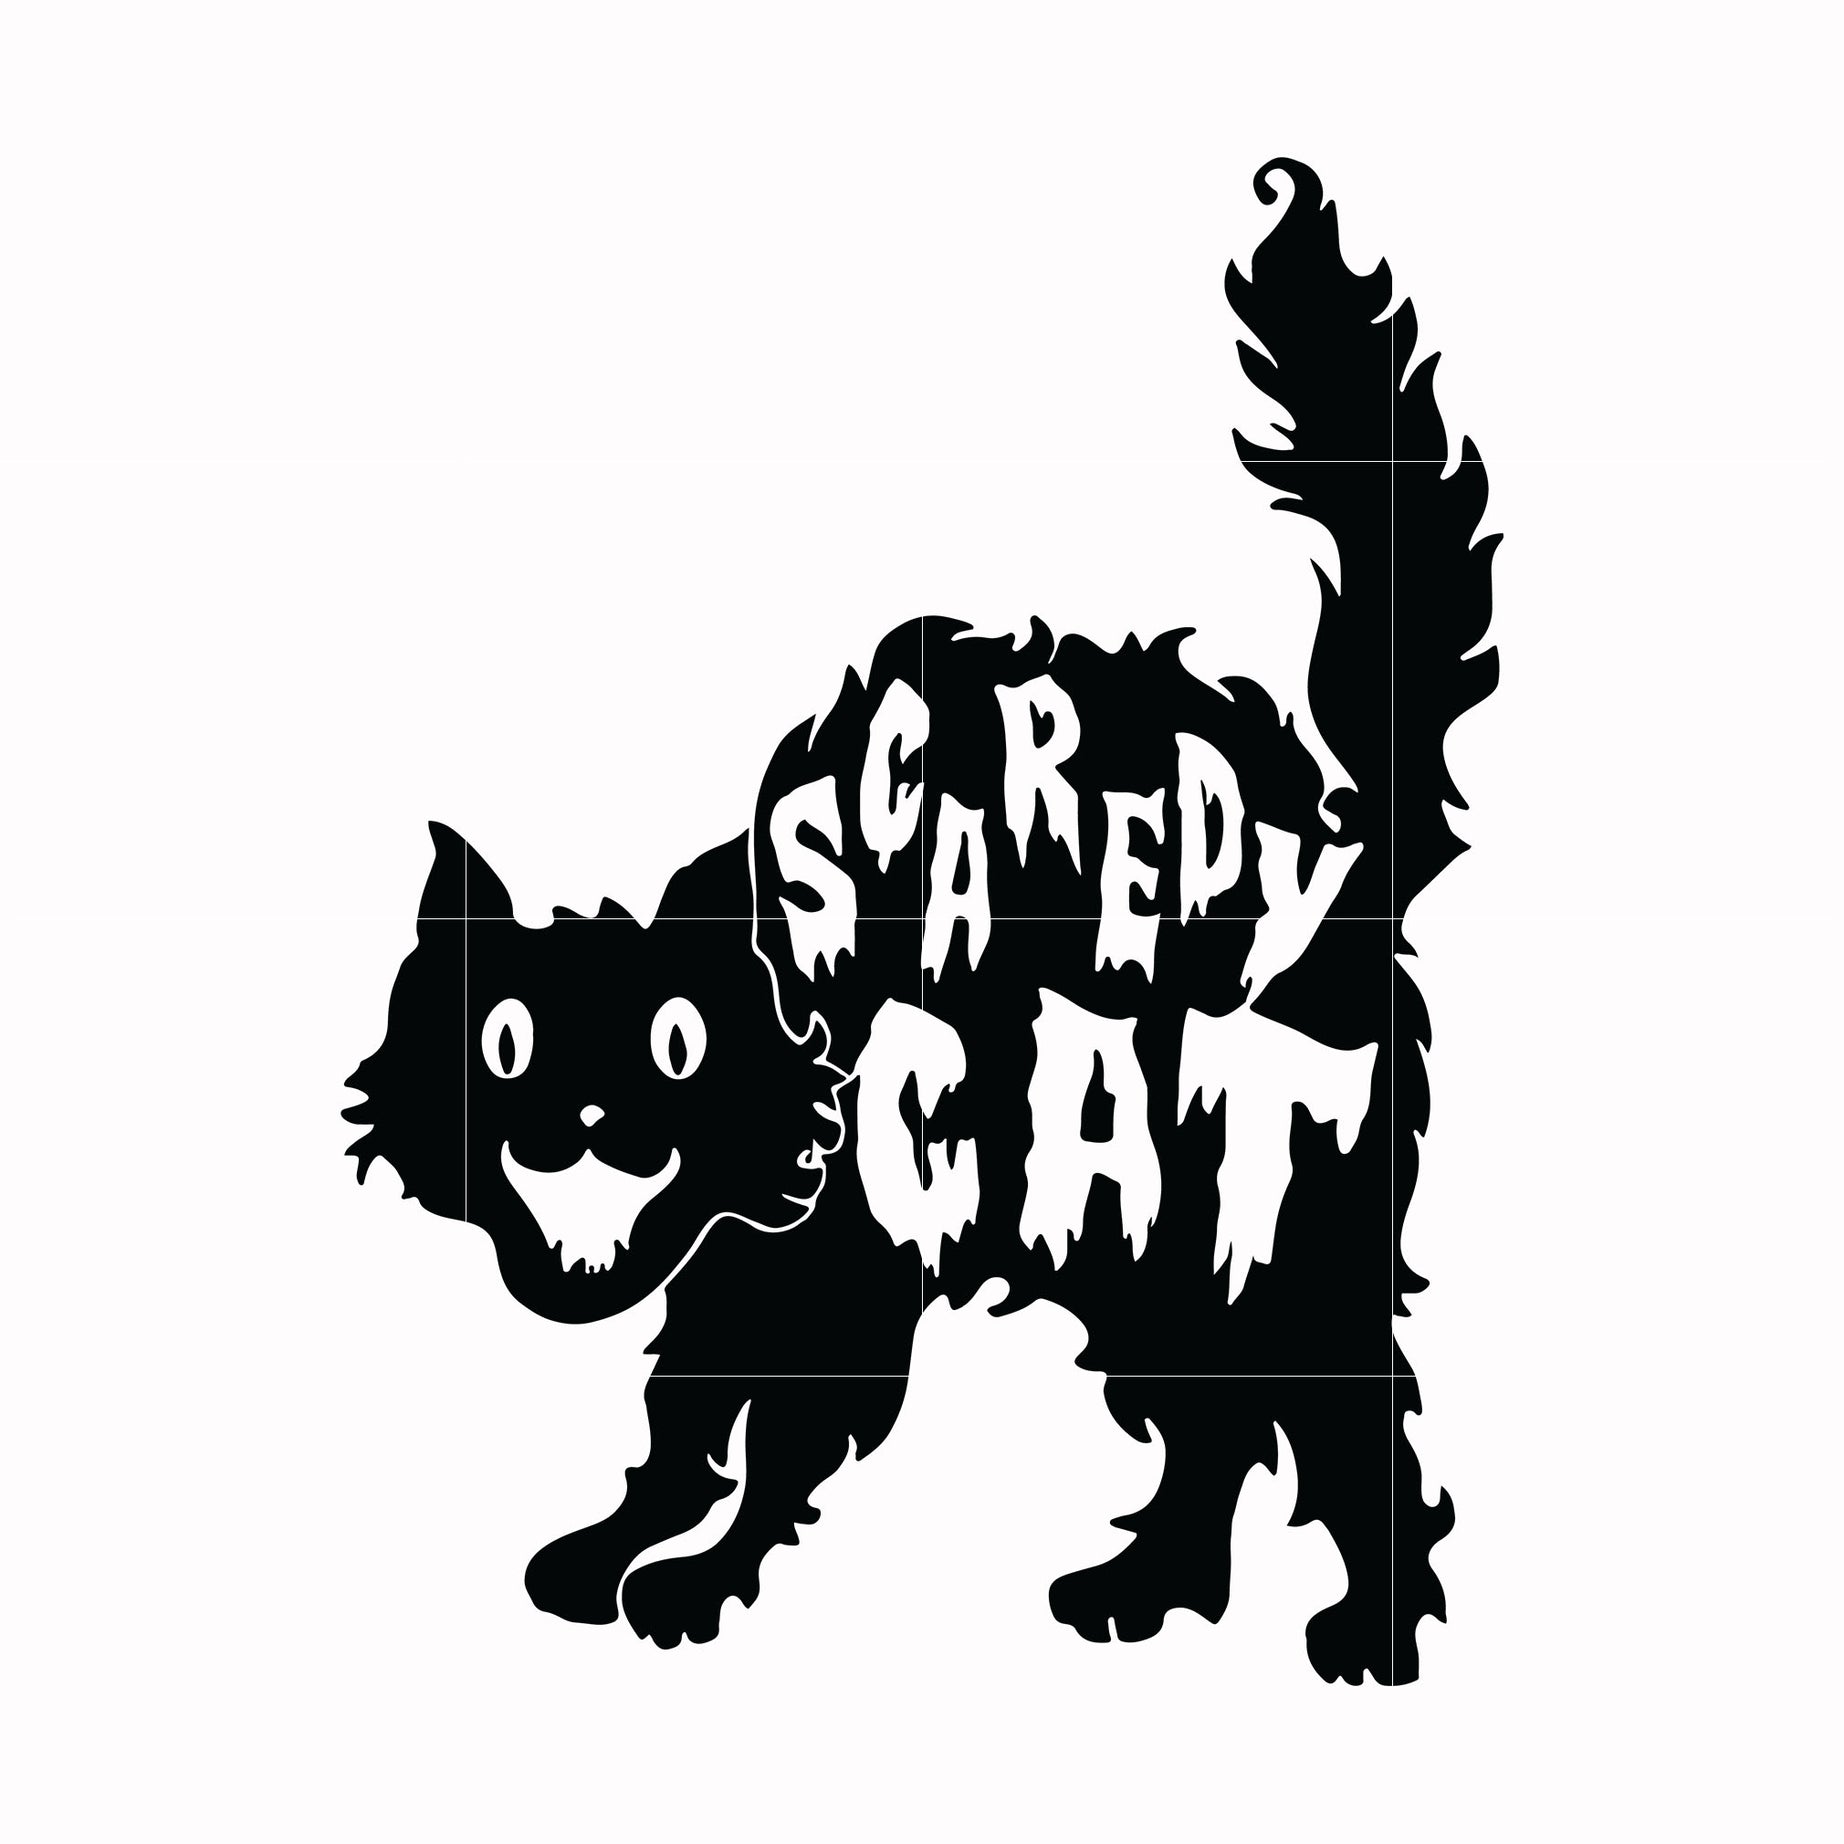 Scaredy cat svg, png, dxf, eps digital file HLW17072014